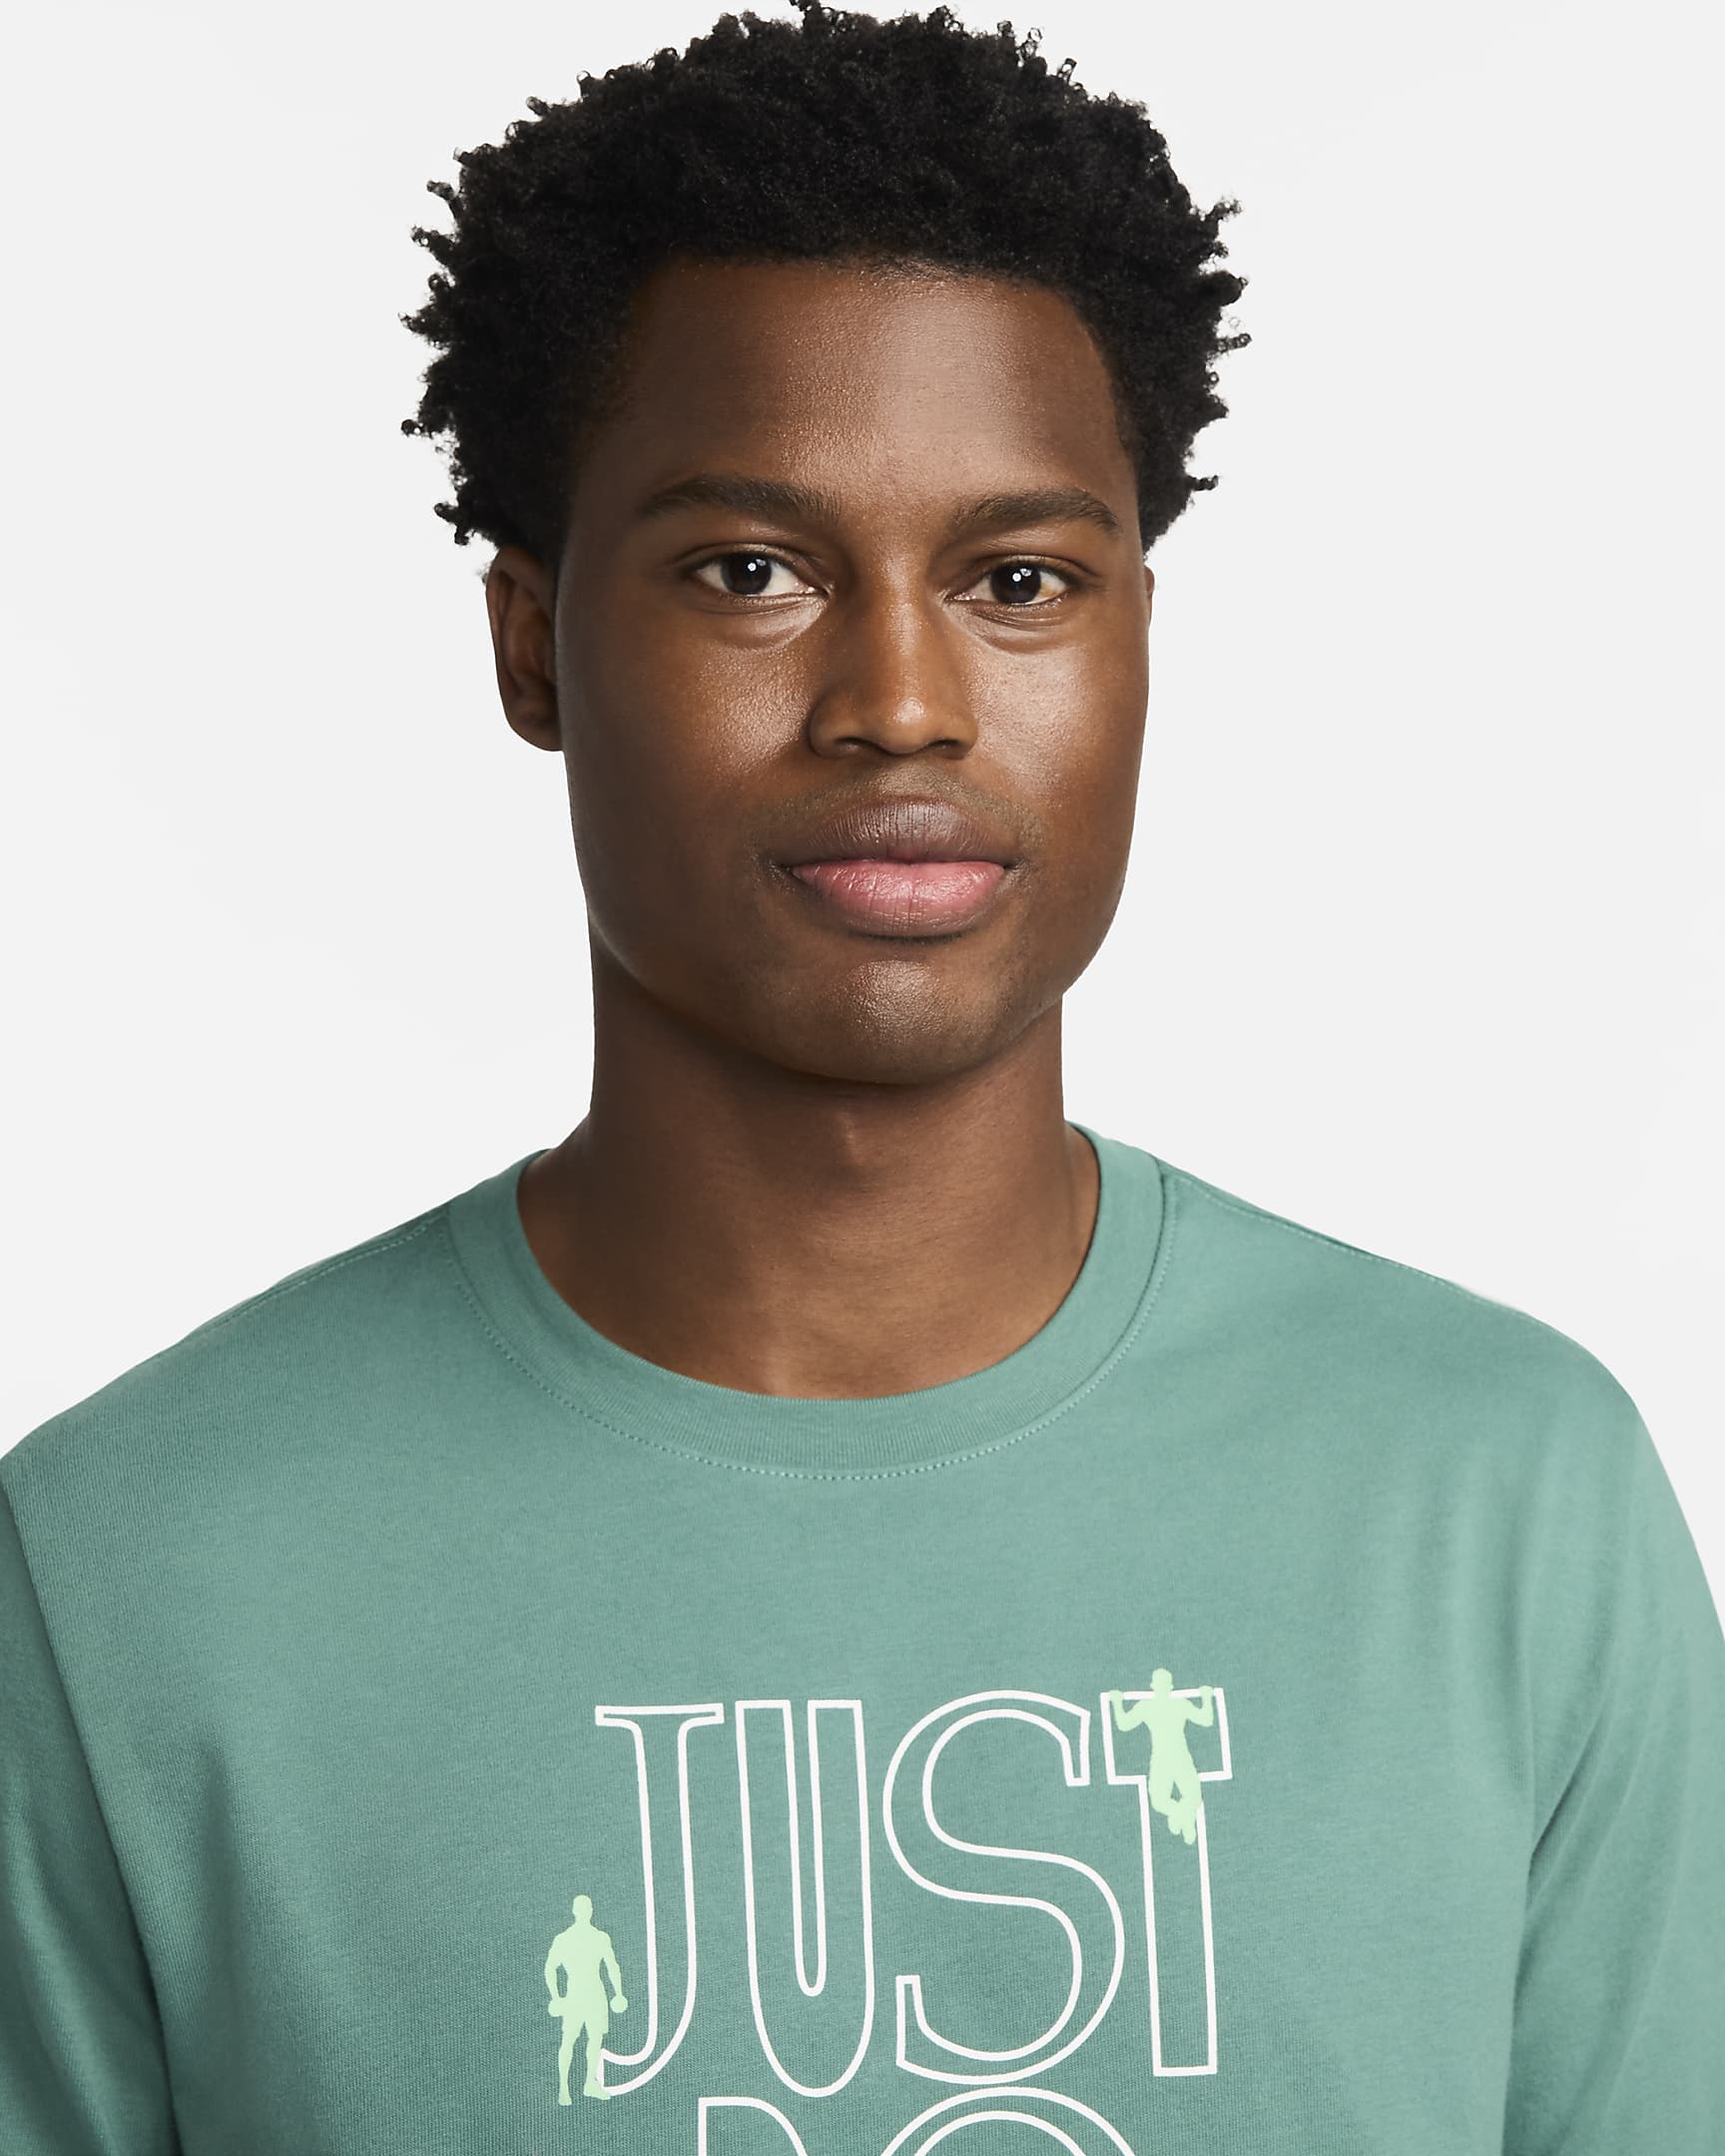 Nike Men's Fitness T-Shirt - Bicoastal